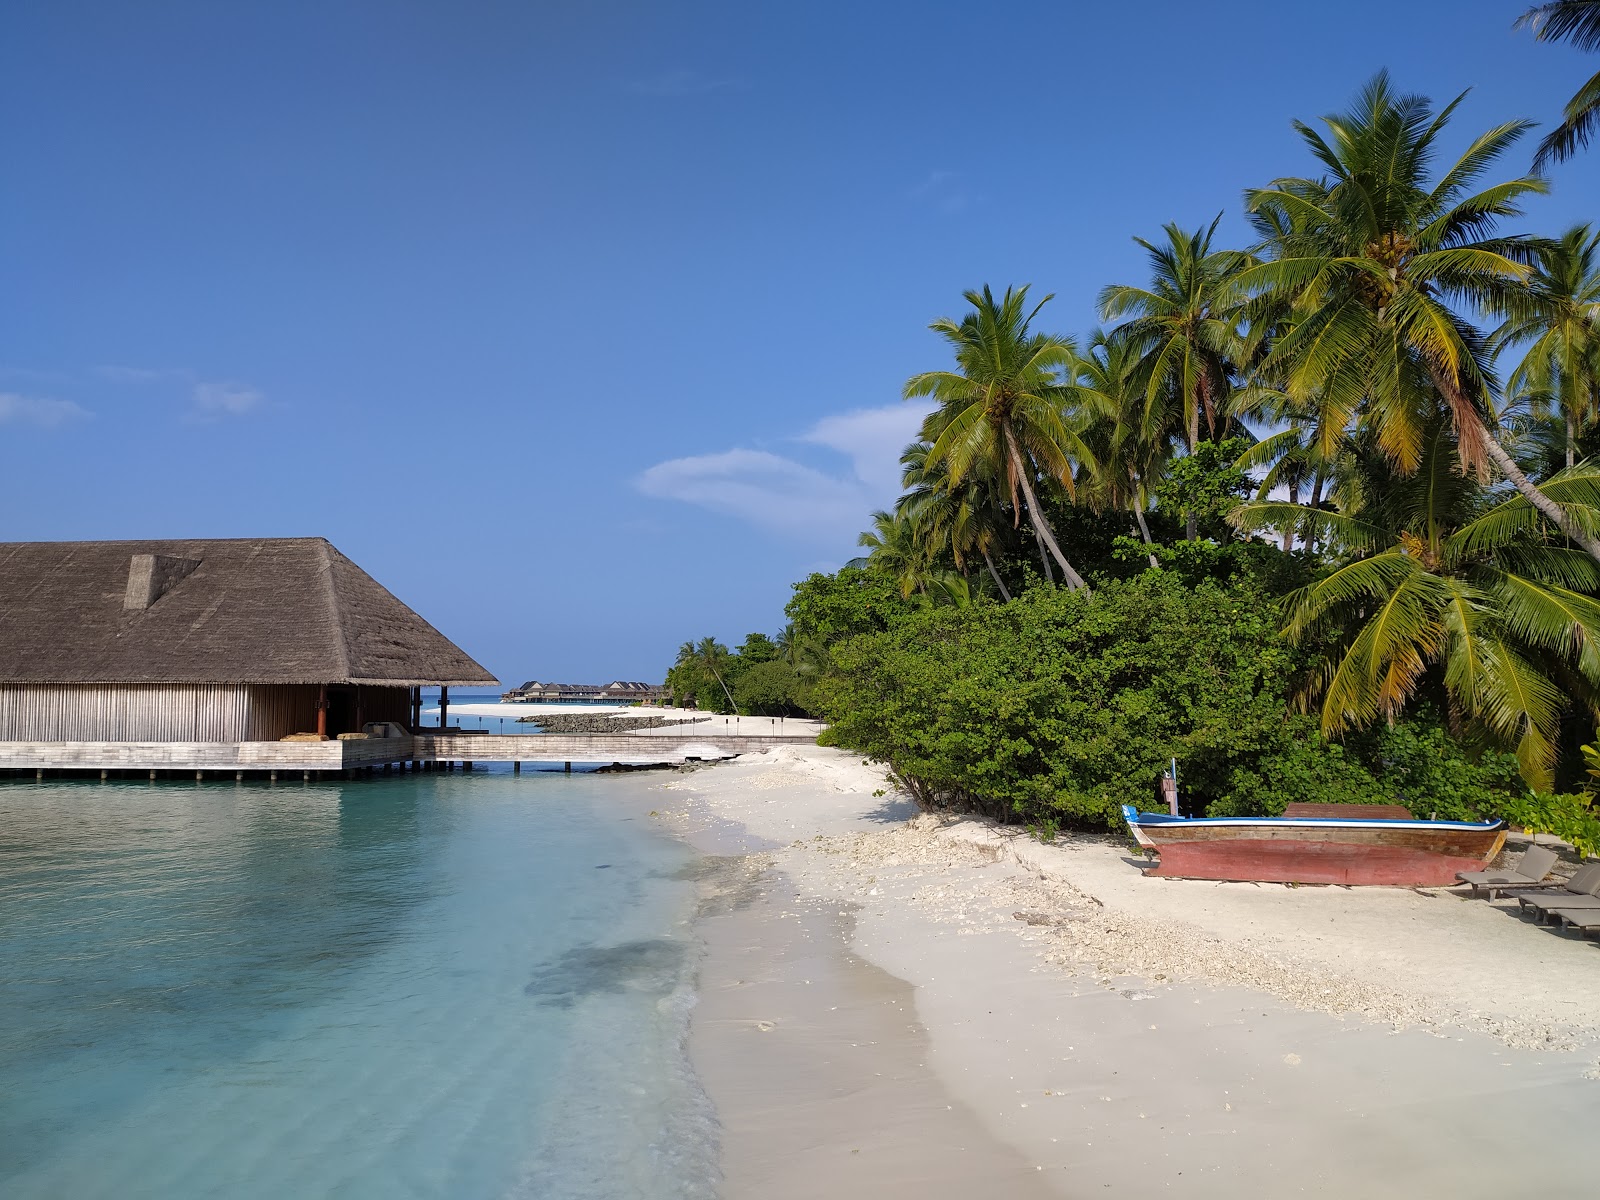 Foto von Joali Maldives mit geräumiger strand